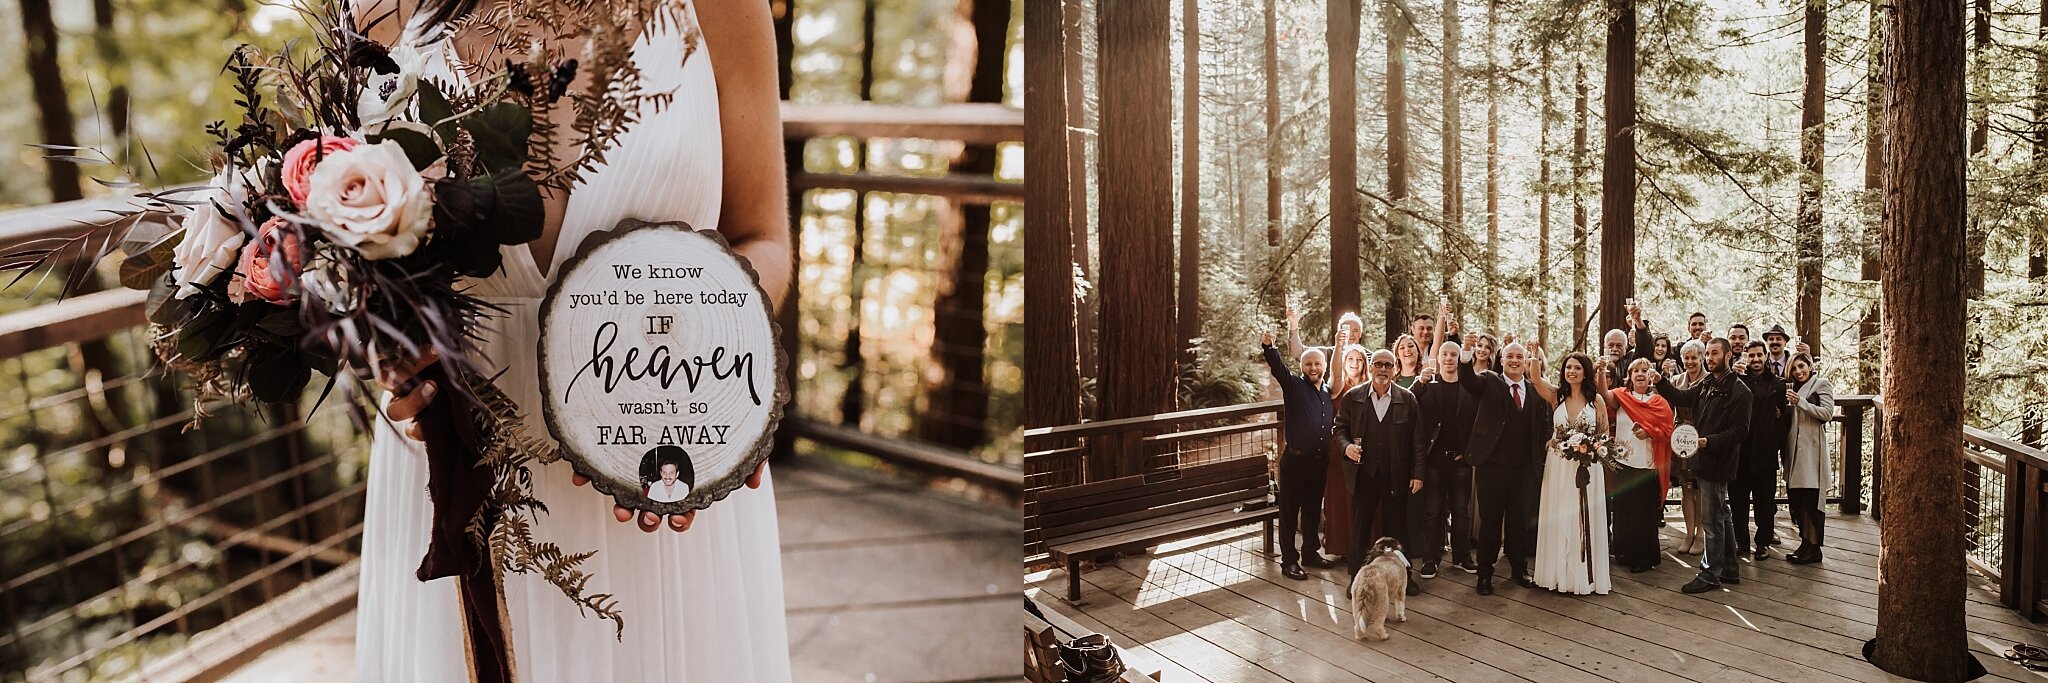 Hoyt Arboretum Oregon Coast Wedding Photographer (31).jpg